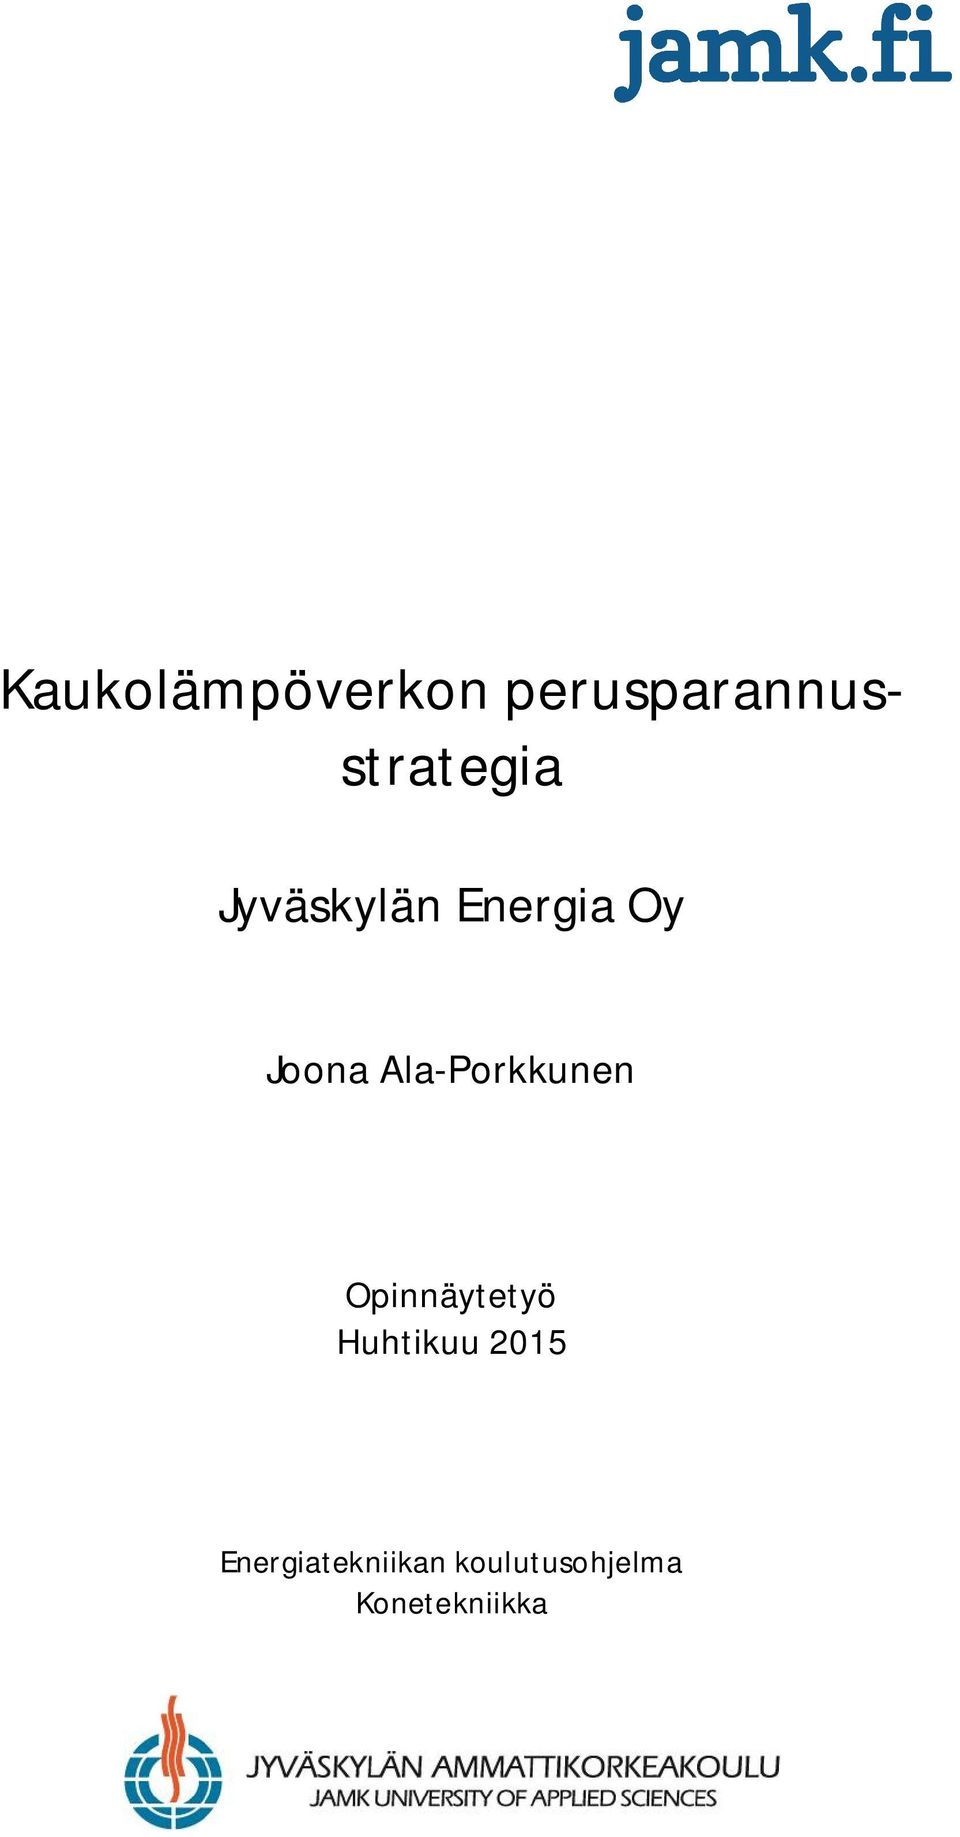 Energia Oy Joona Ala-Porkkunen